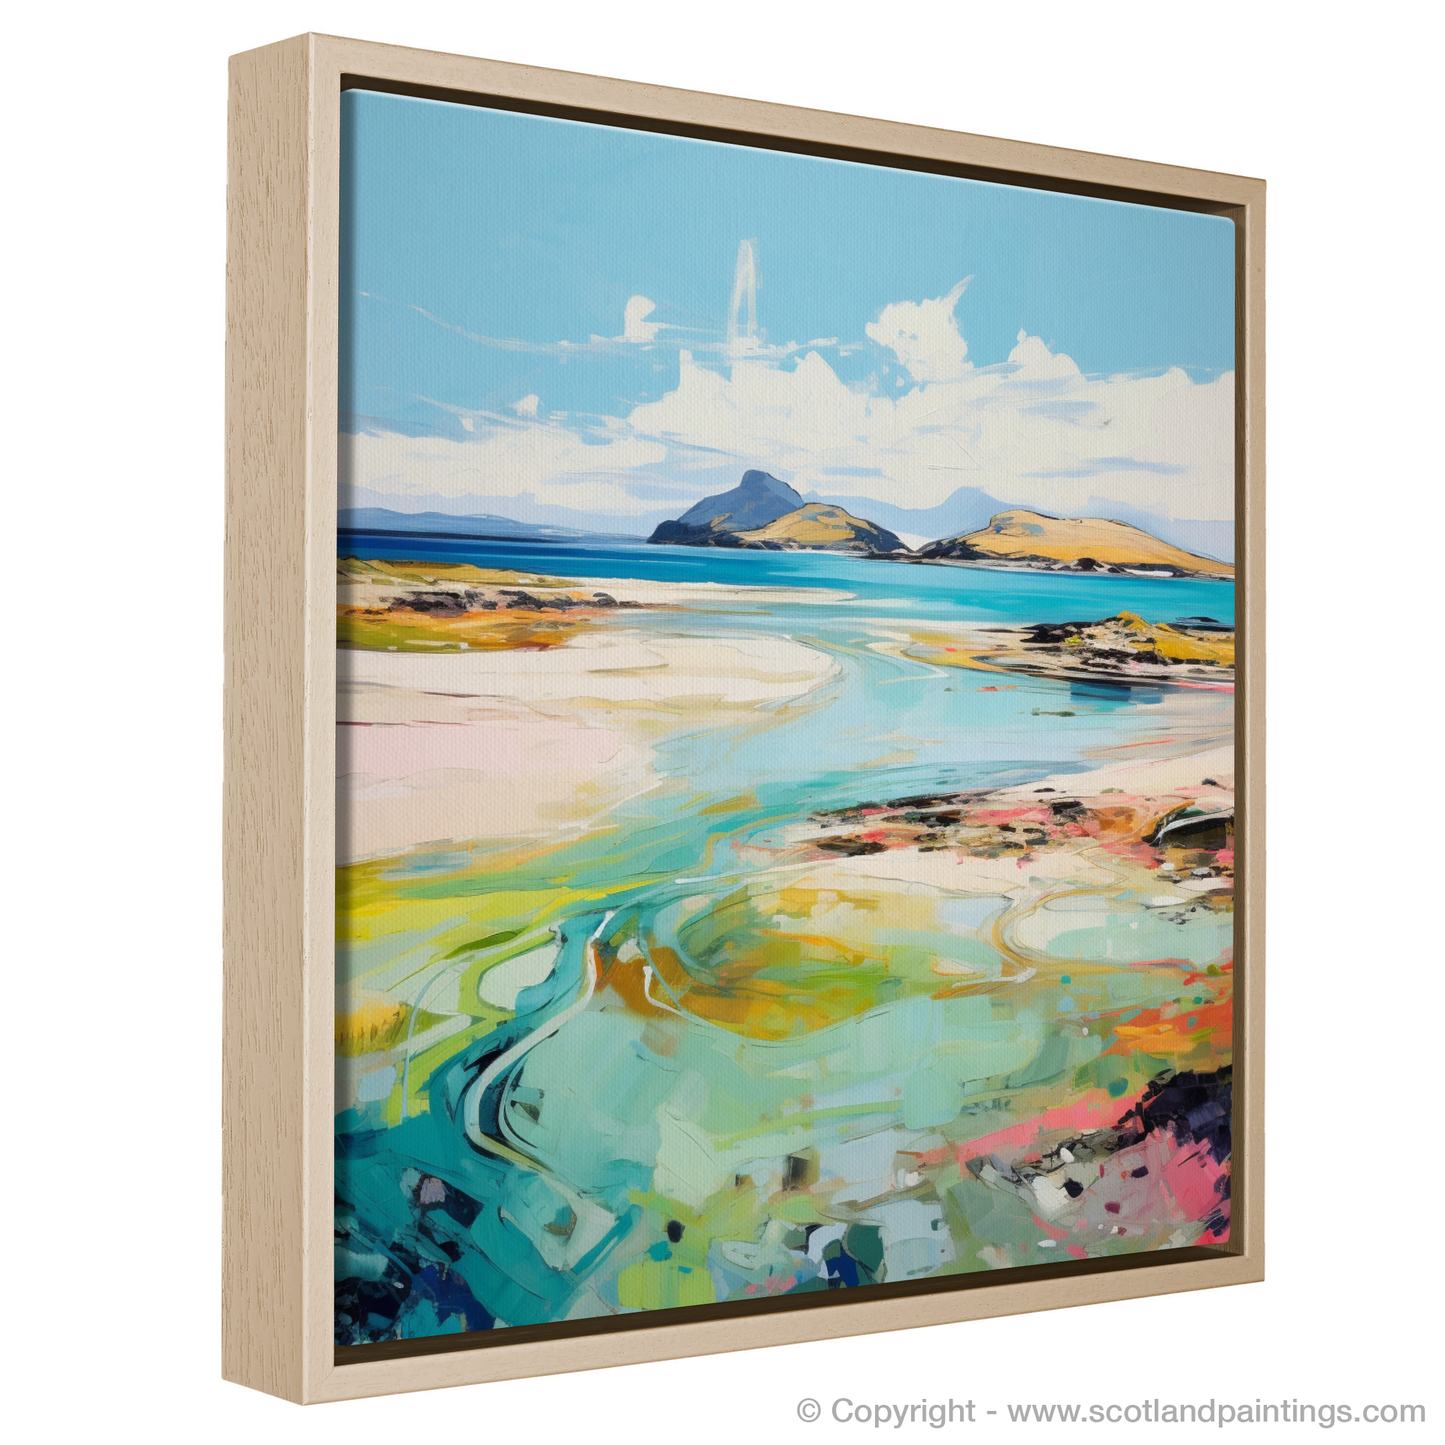 Painting and Art Print of Isle of Jura, Inner Hebrides in summer entitled "Isle of Jura Summer Serenade".